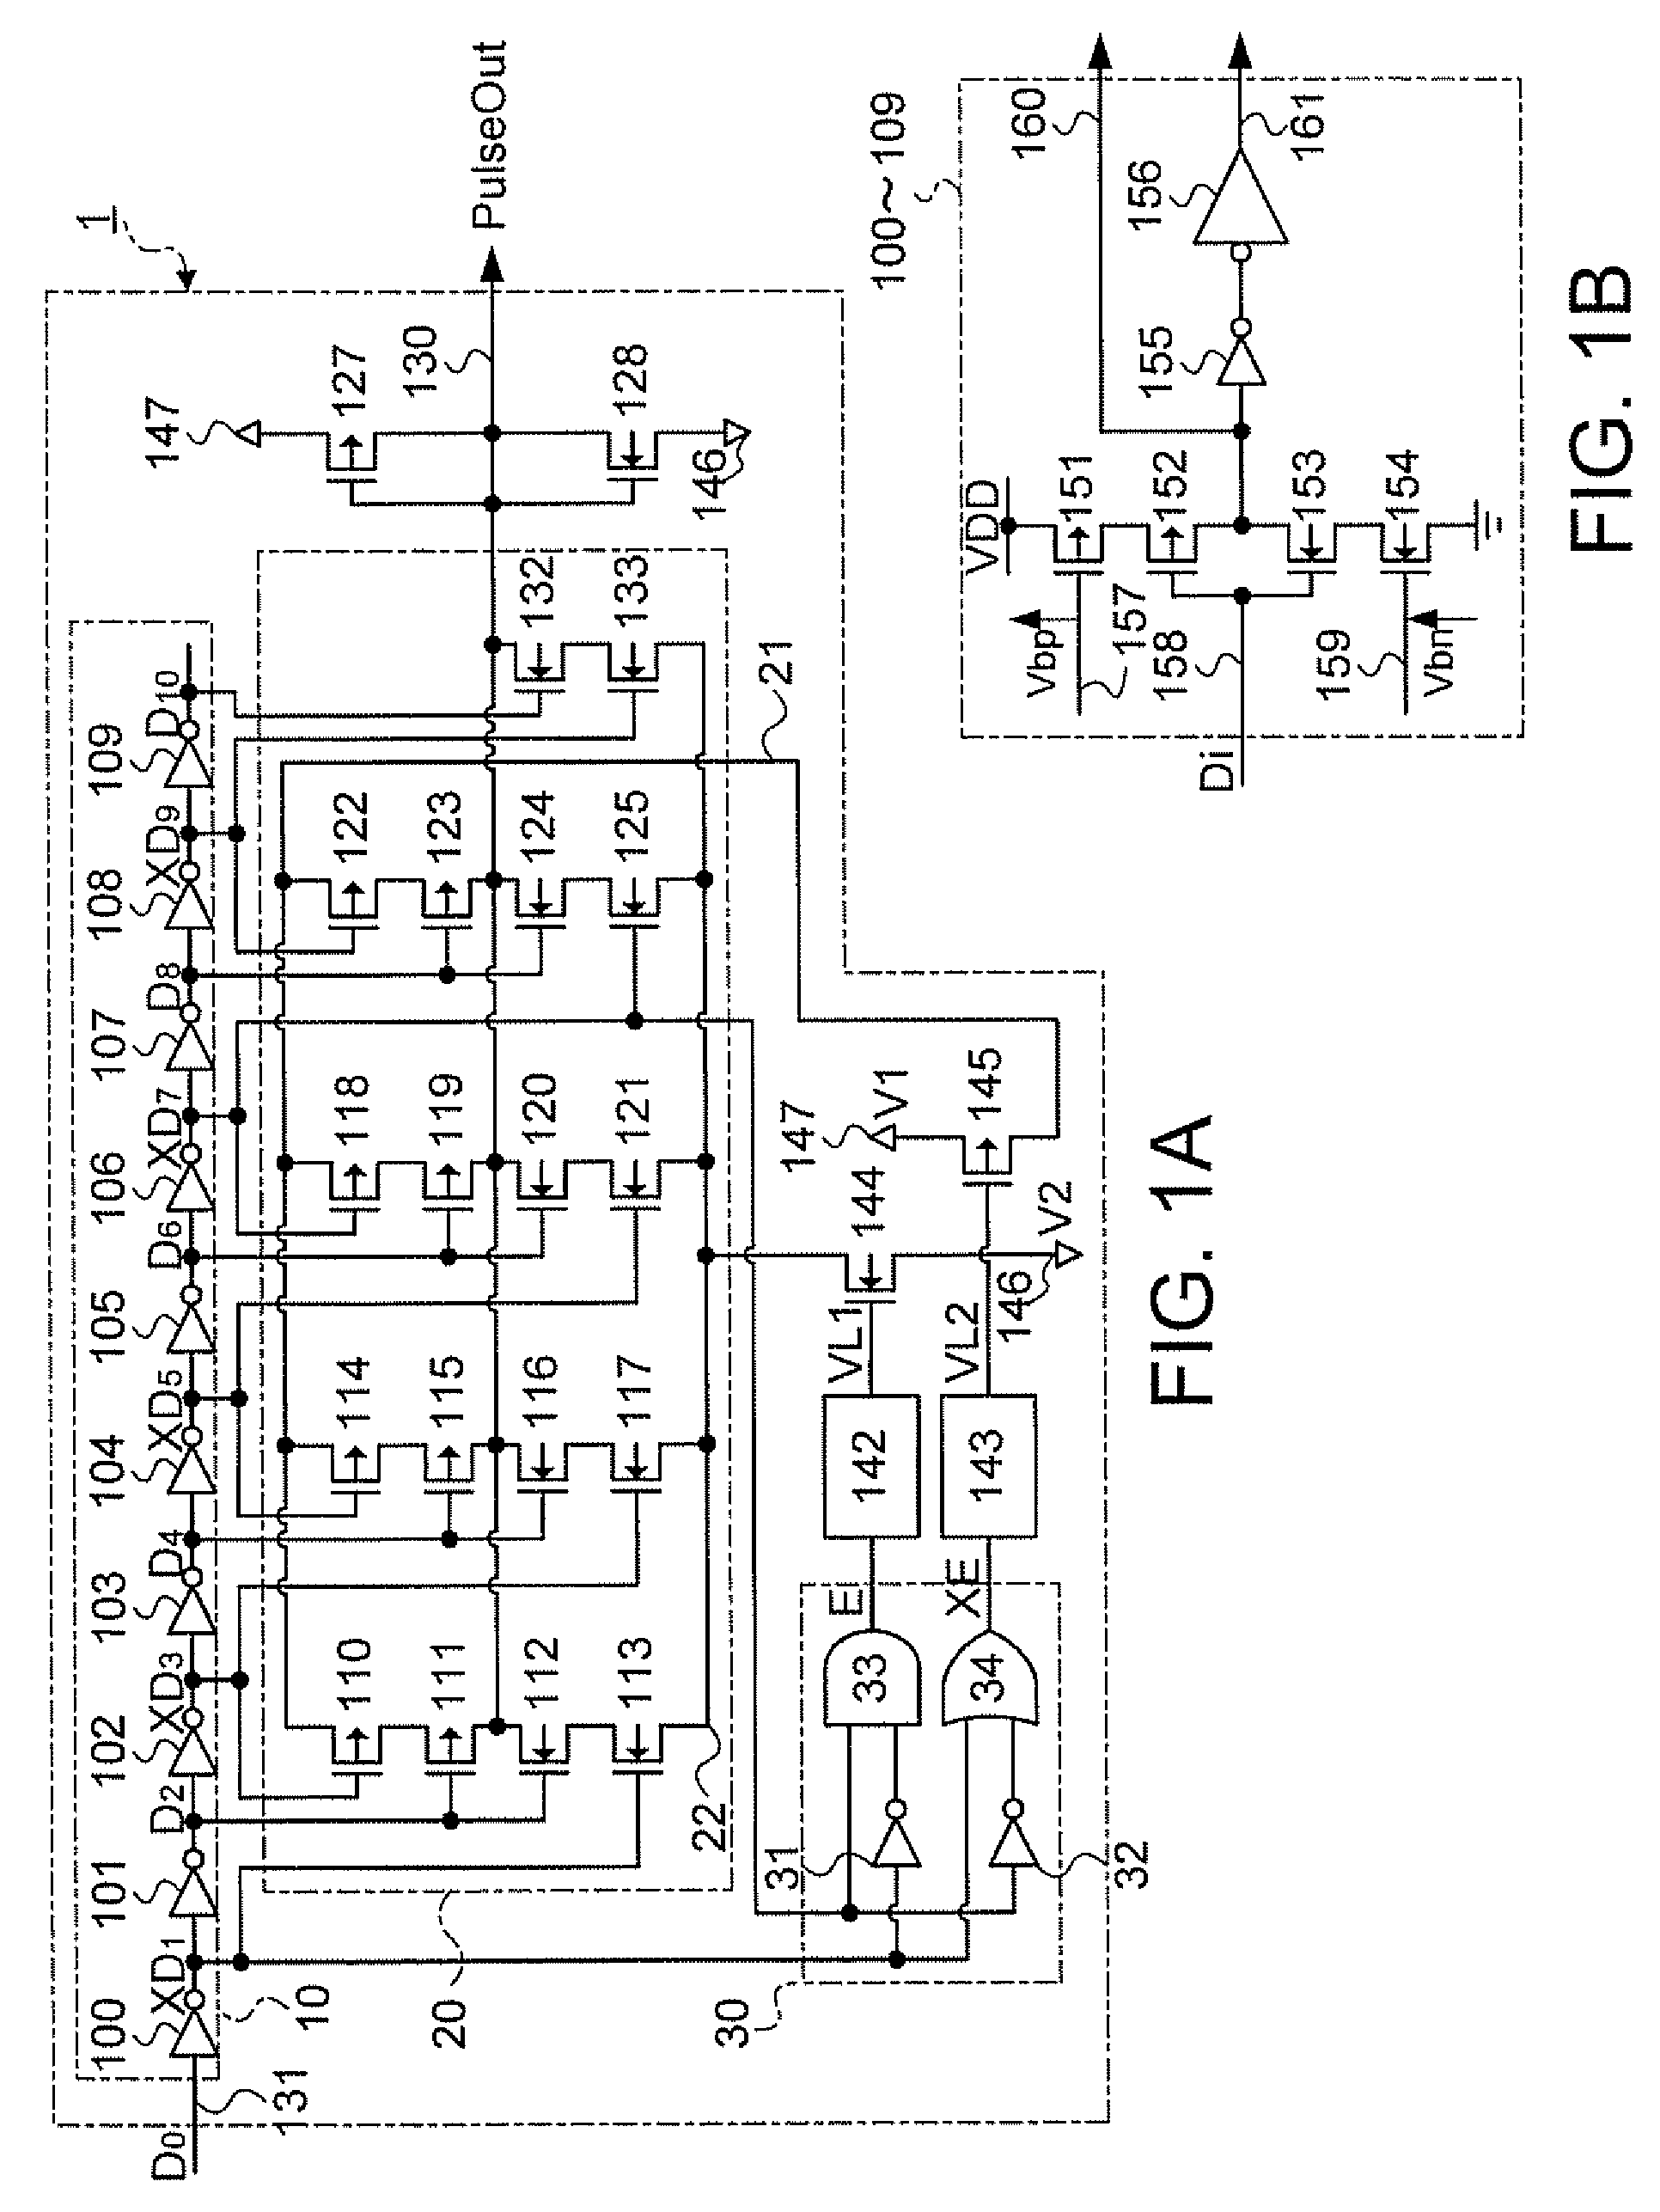 Pulse generator circuit and communication apparatus